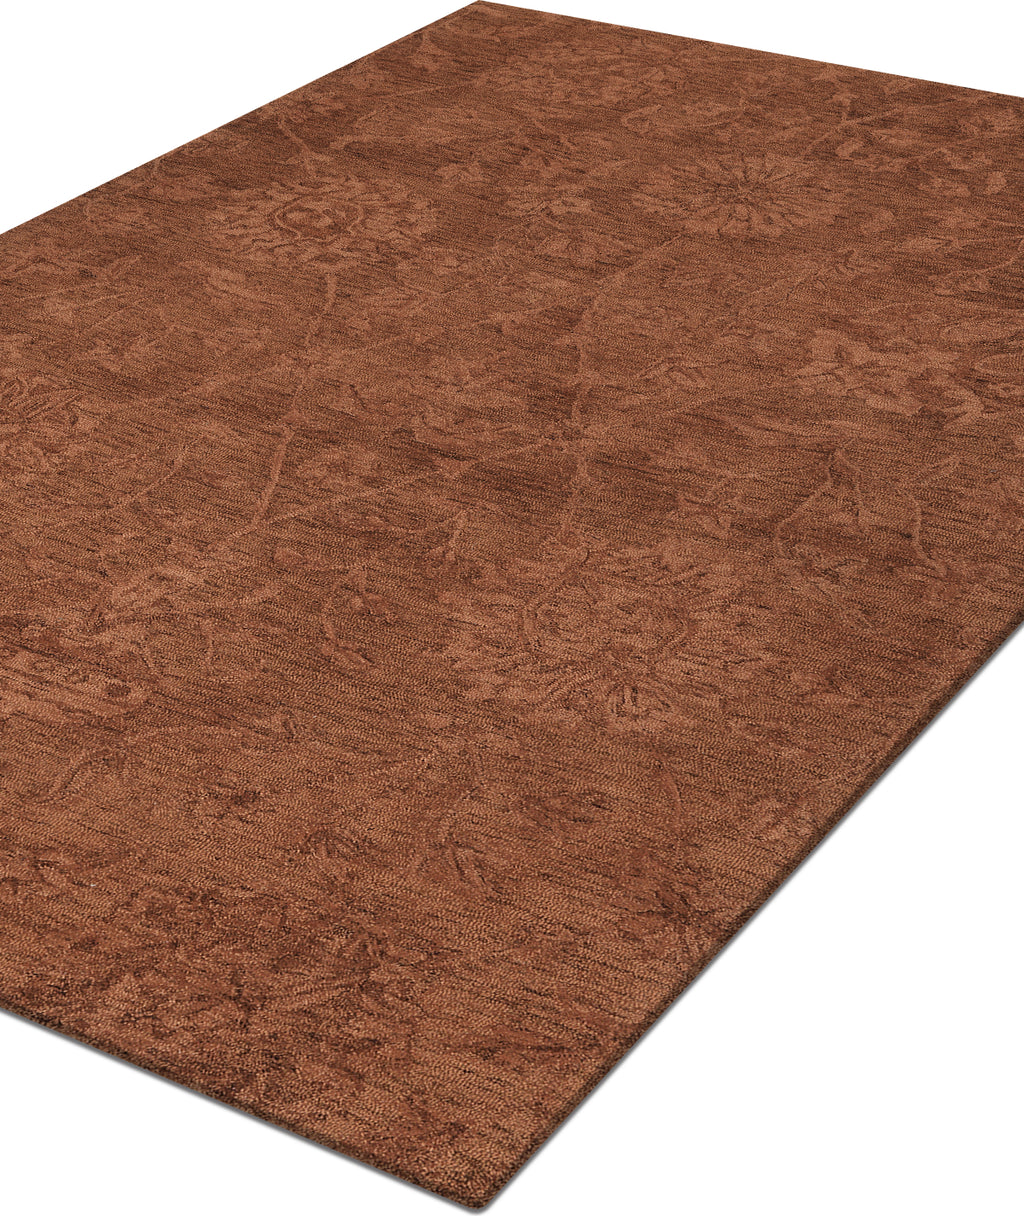 Dalyn Korba KB1 Copper Area Rug Floor Image Feature